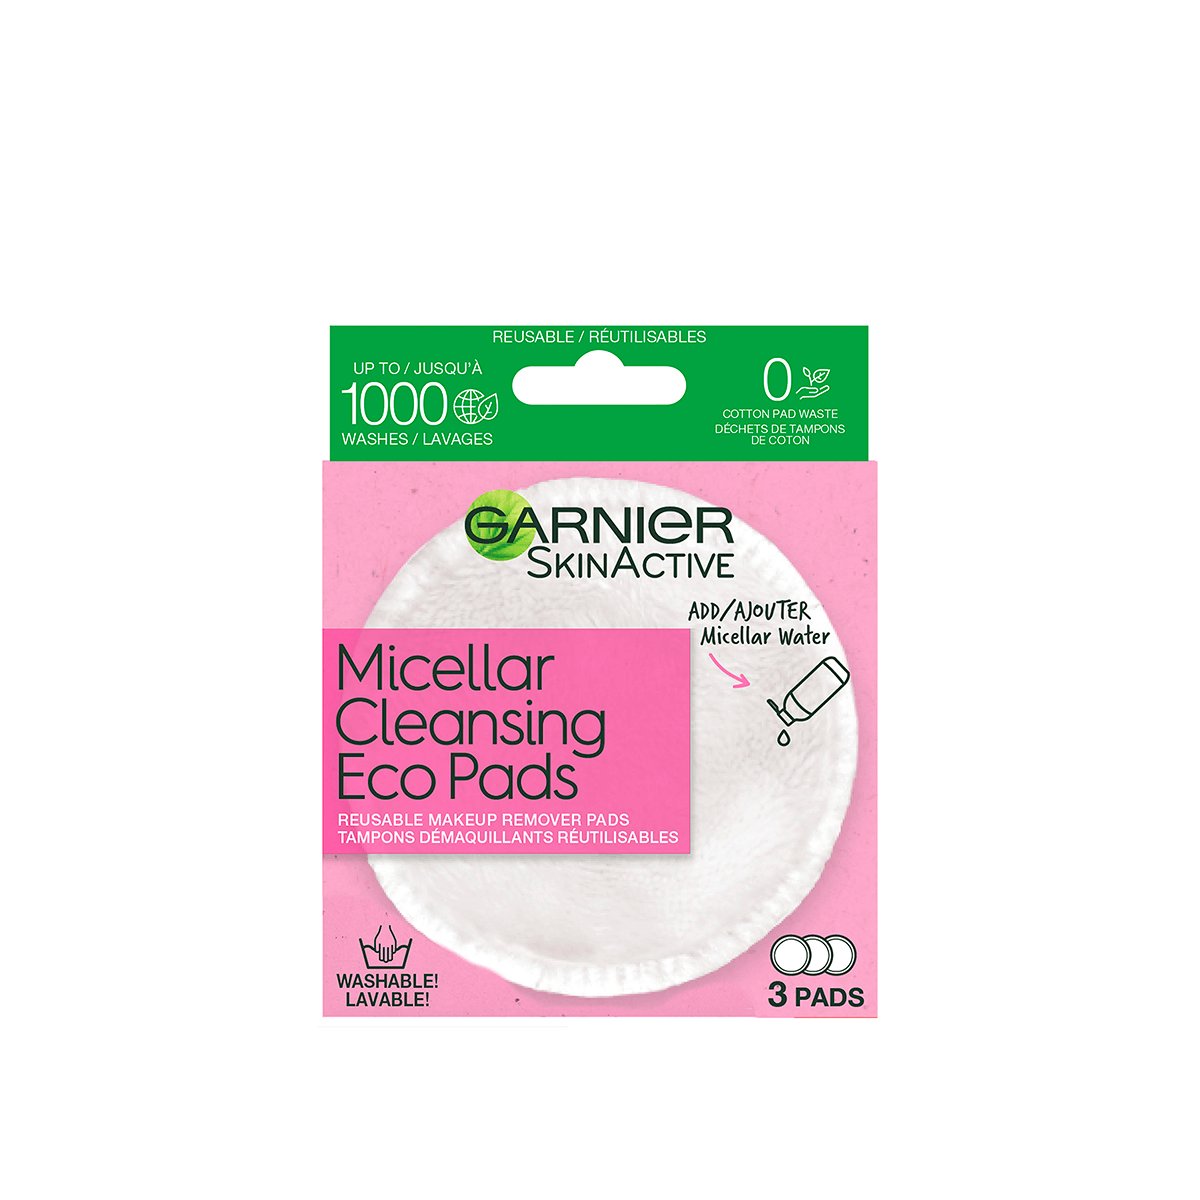 garnier skinactive micellar cleansing eco pads 1